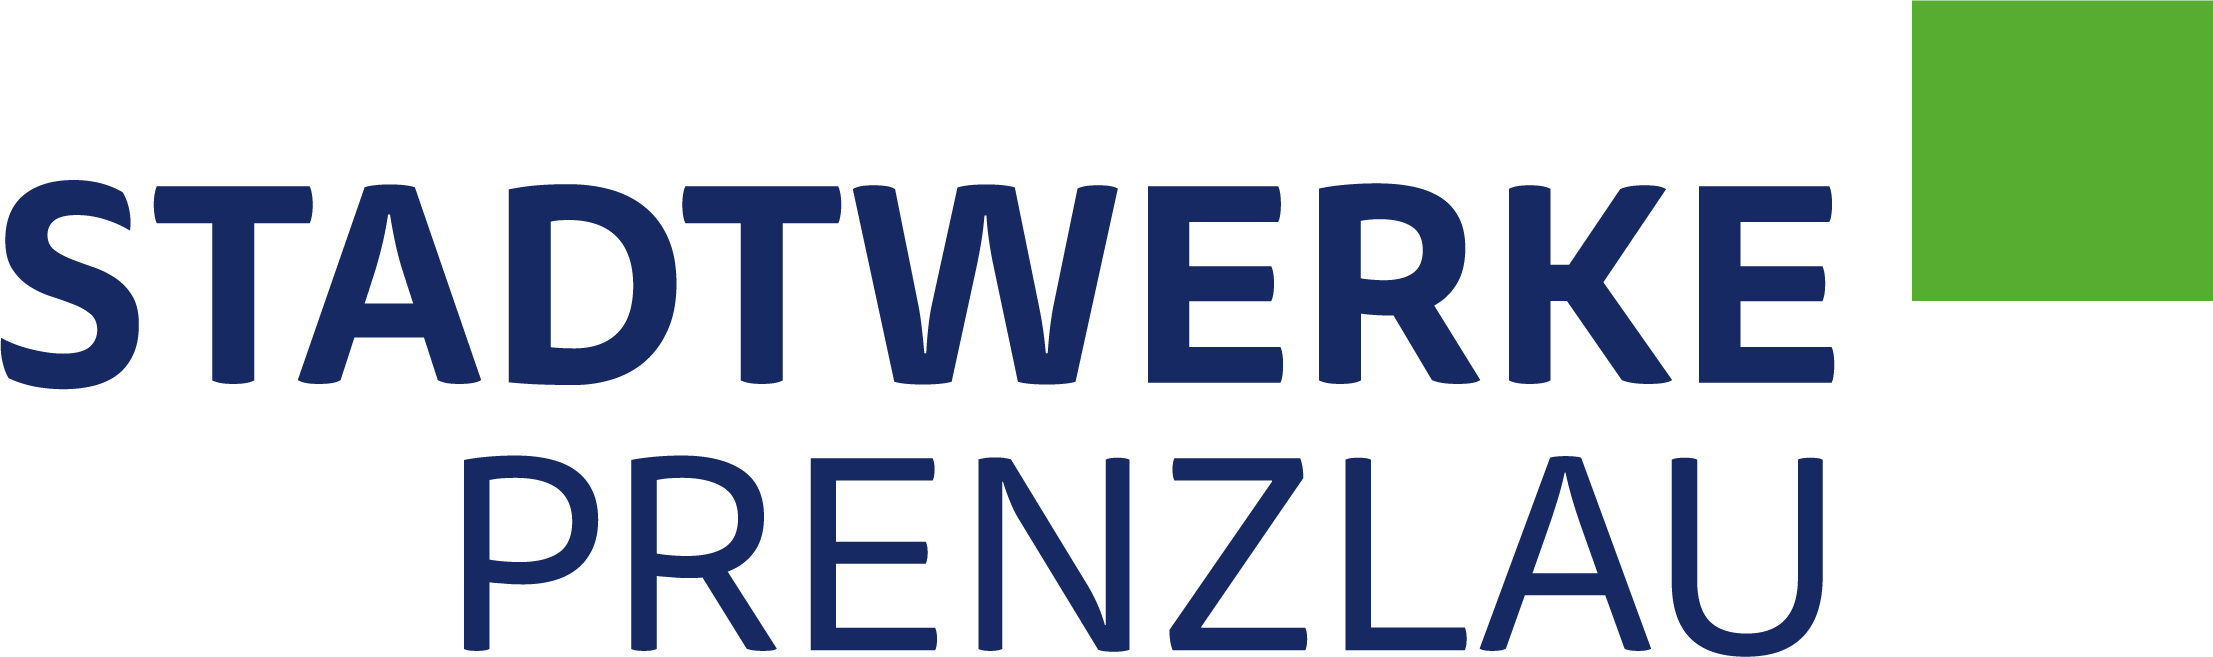 Stadtwerke Prenzlau Logo